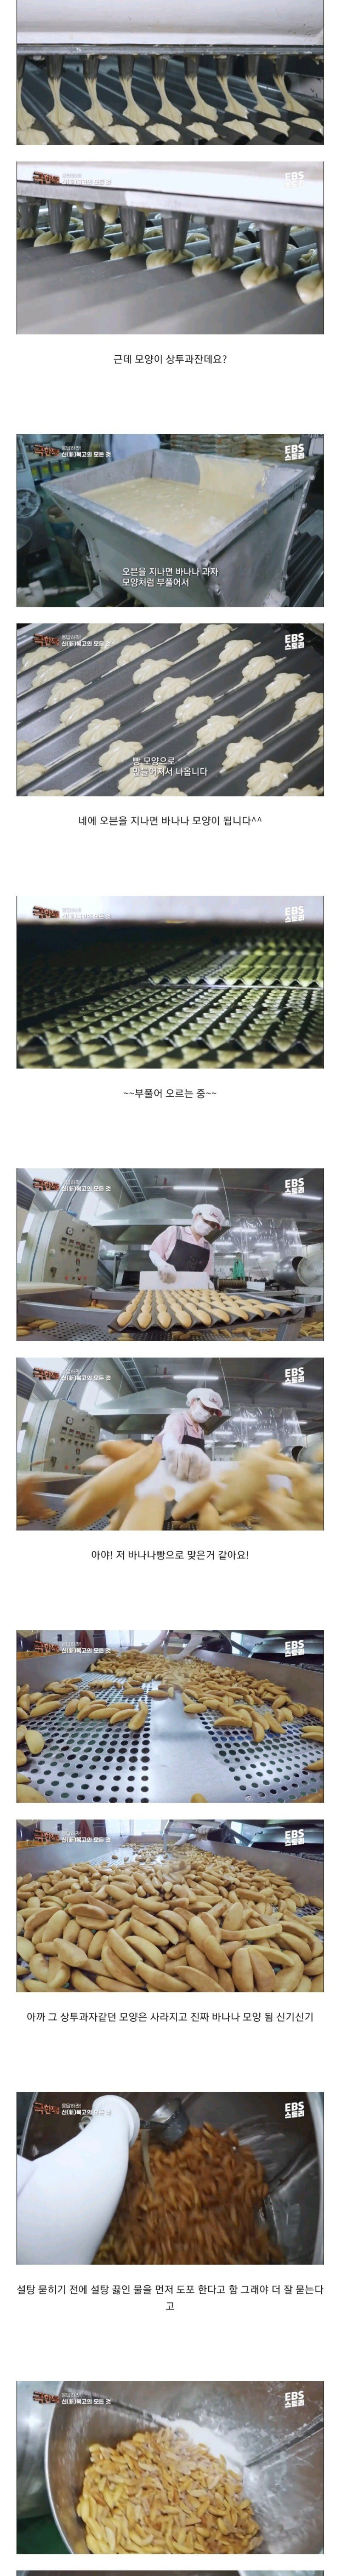 u2.jpg 극한직업 바나나빵 만들기.jpg